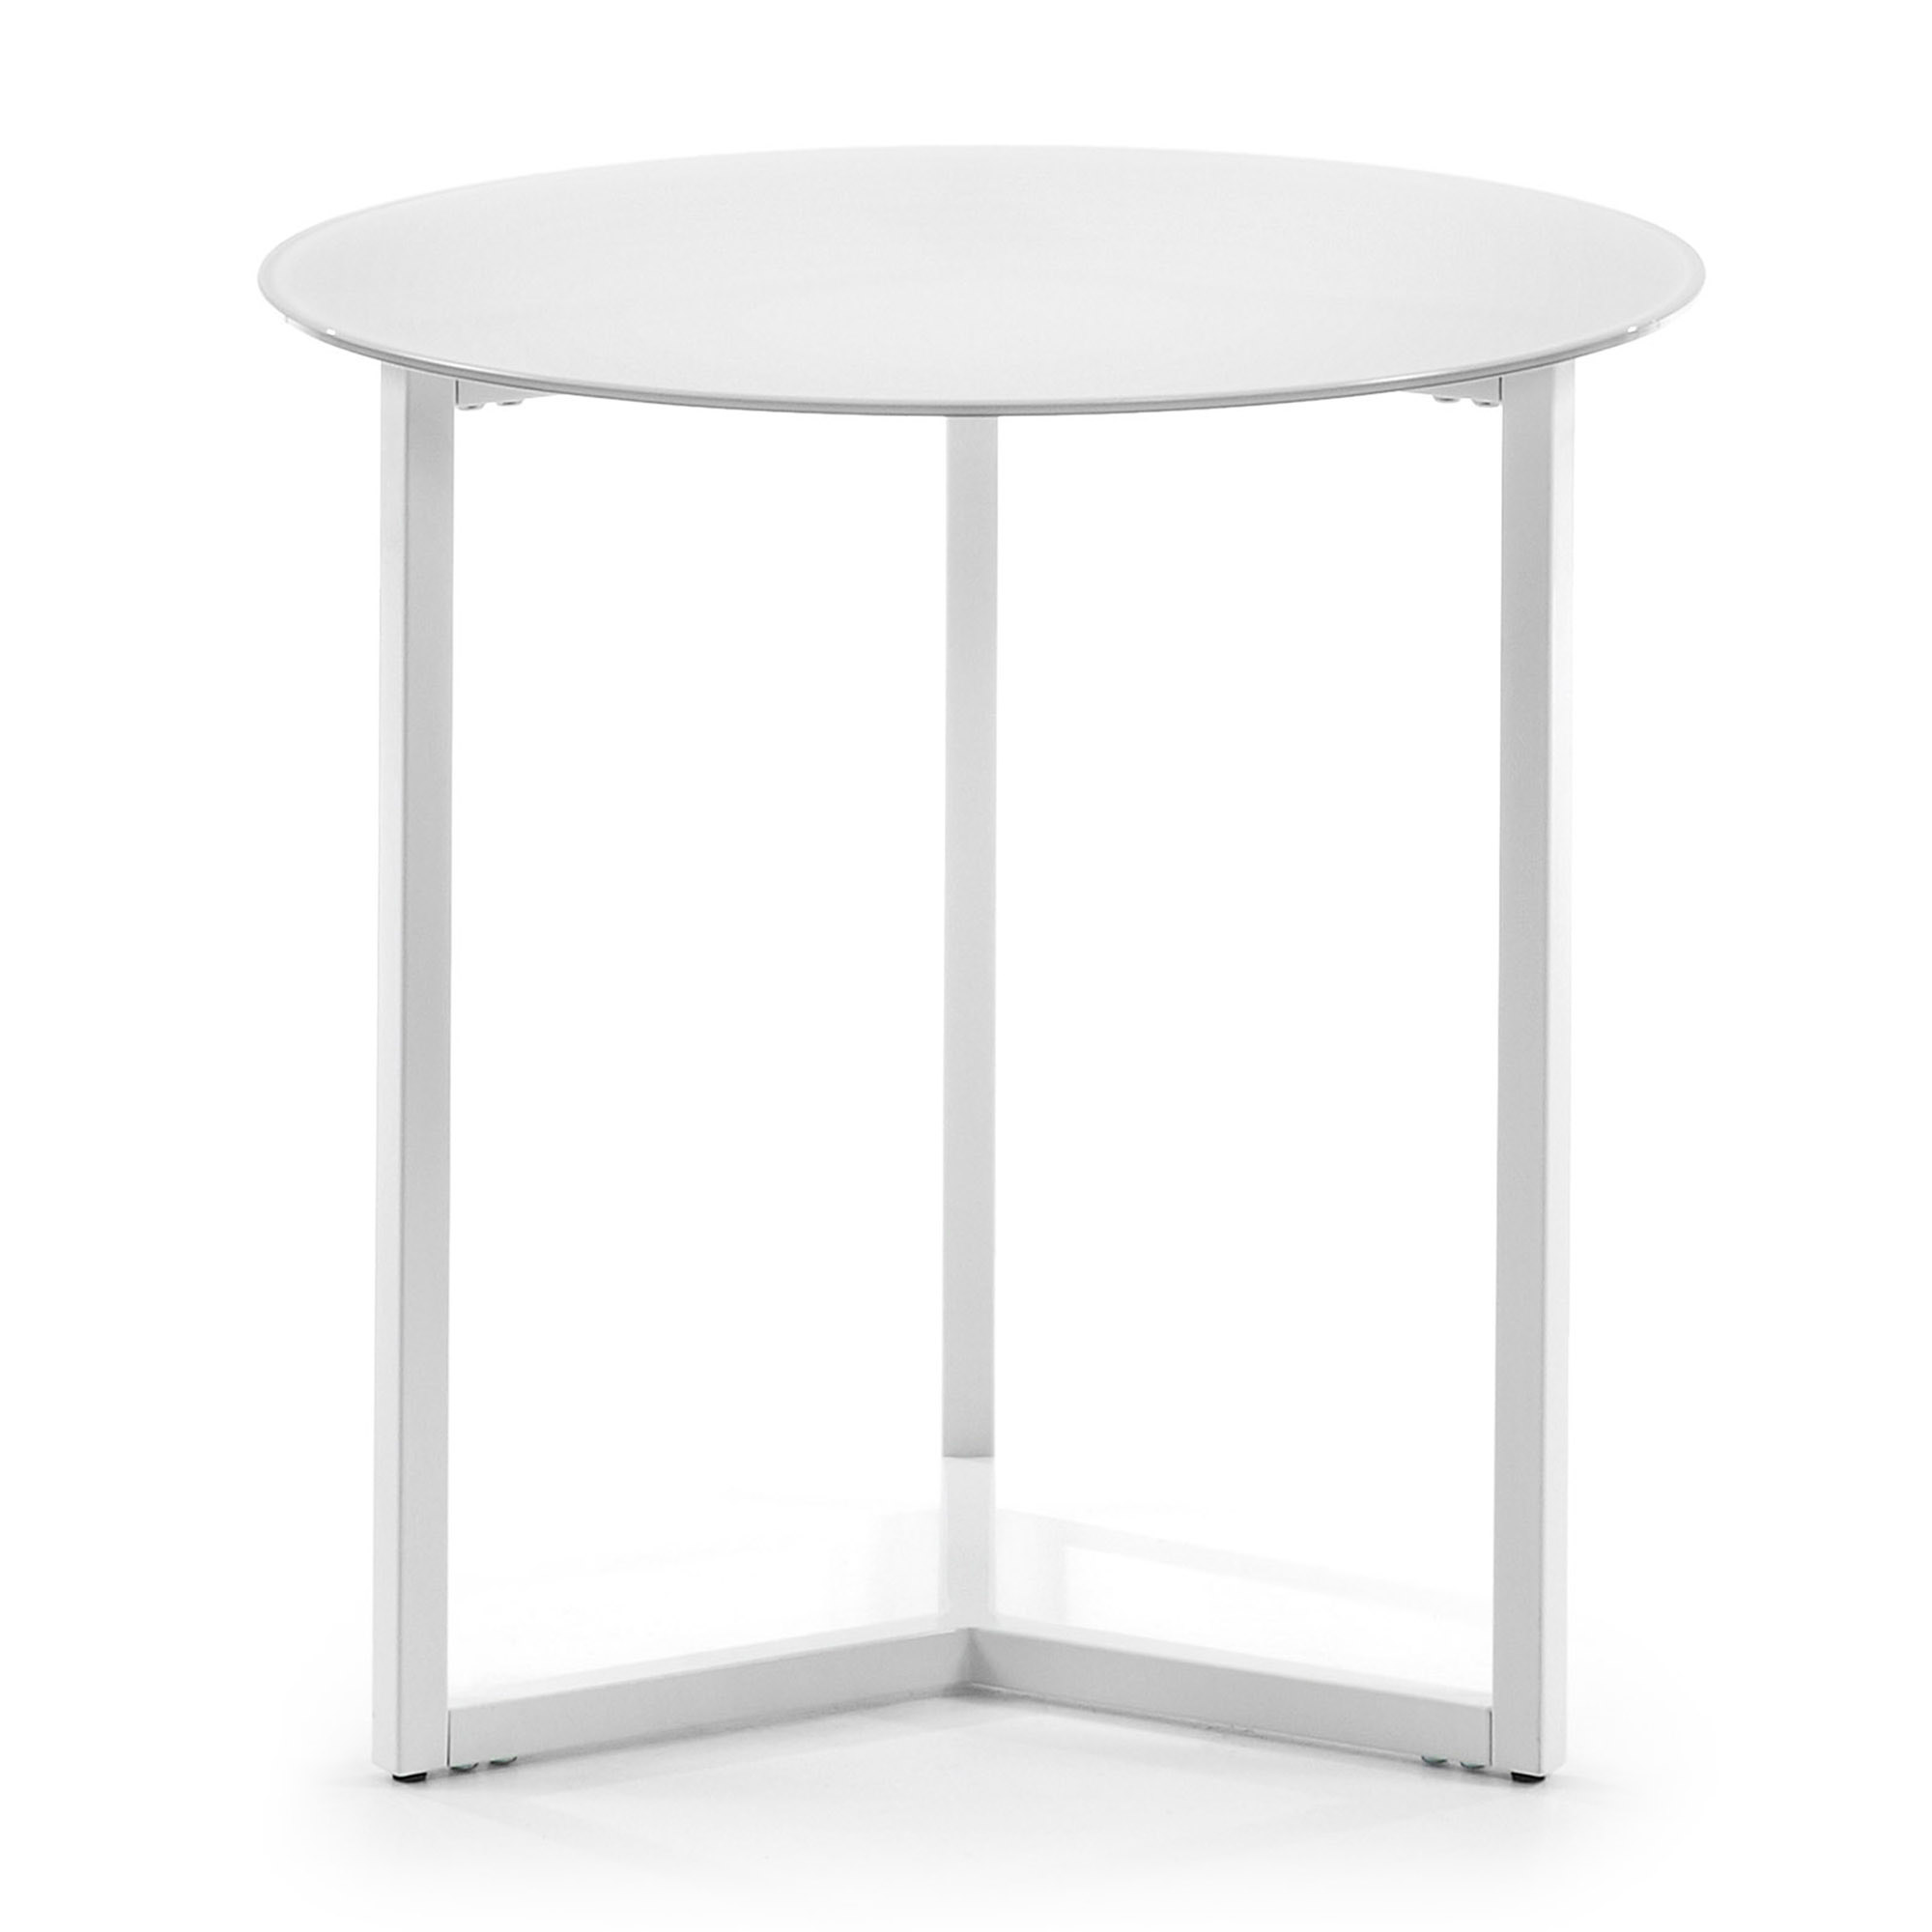 LAFORMA Raeam sidebord, rund - hvid glas og hvid stål (Ø50)